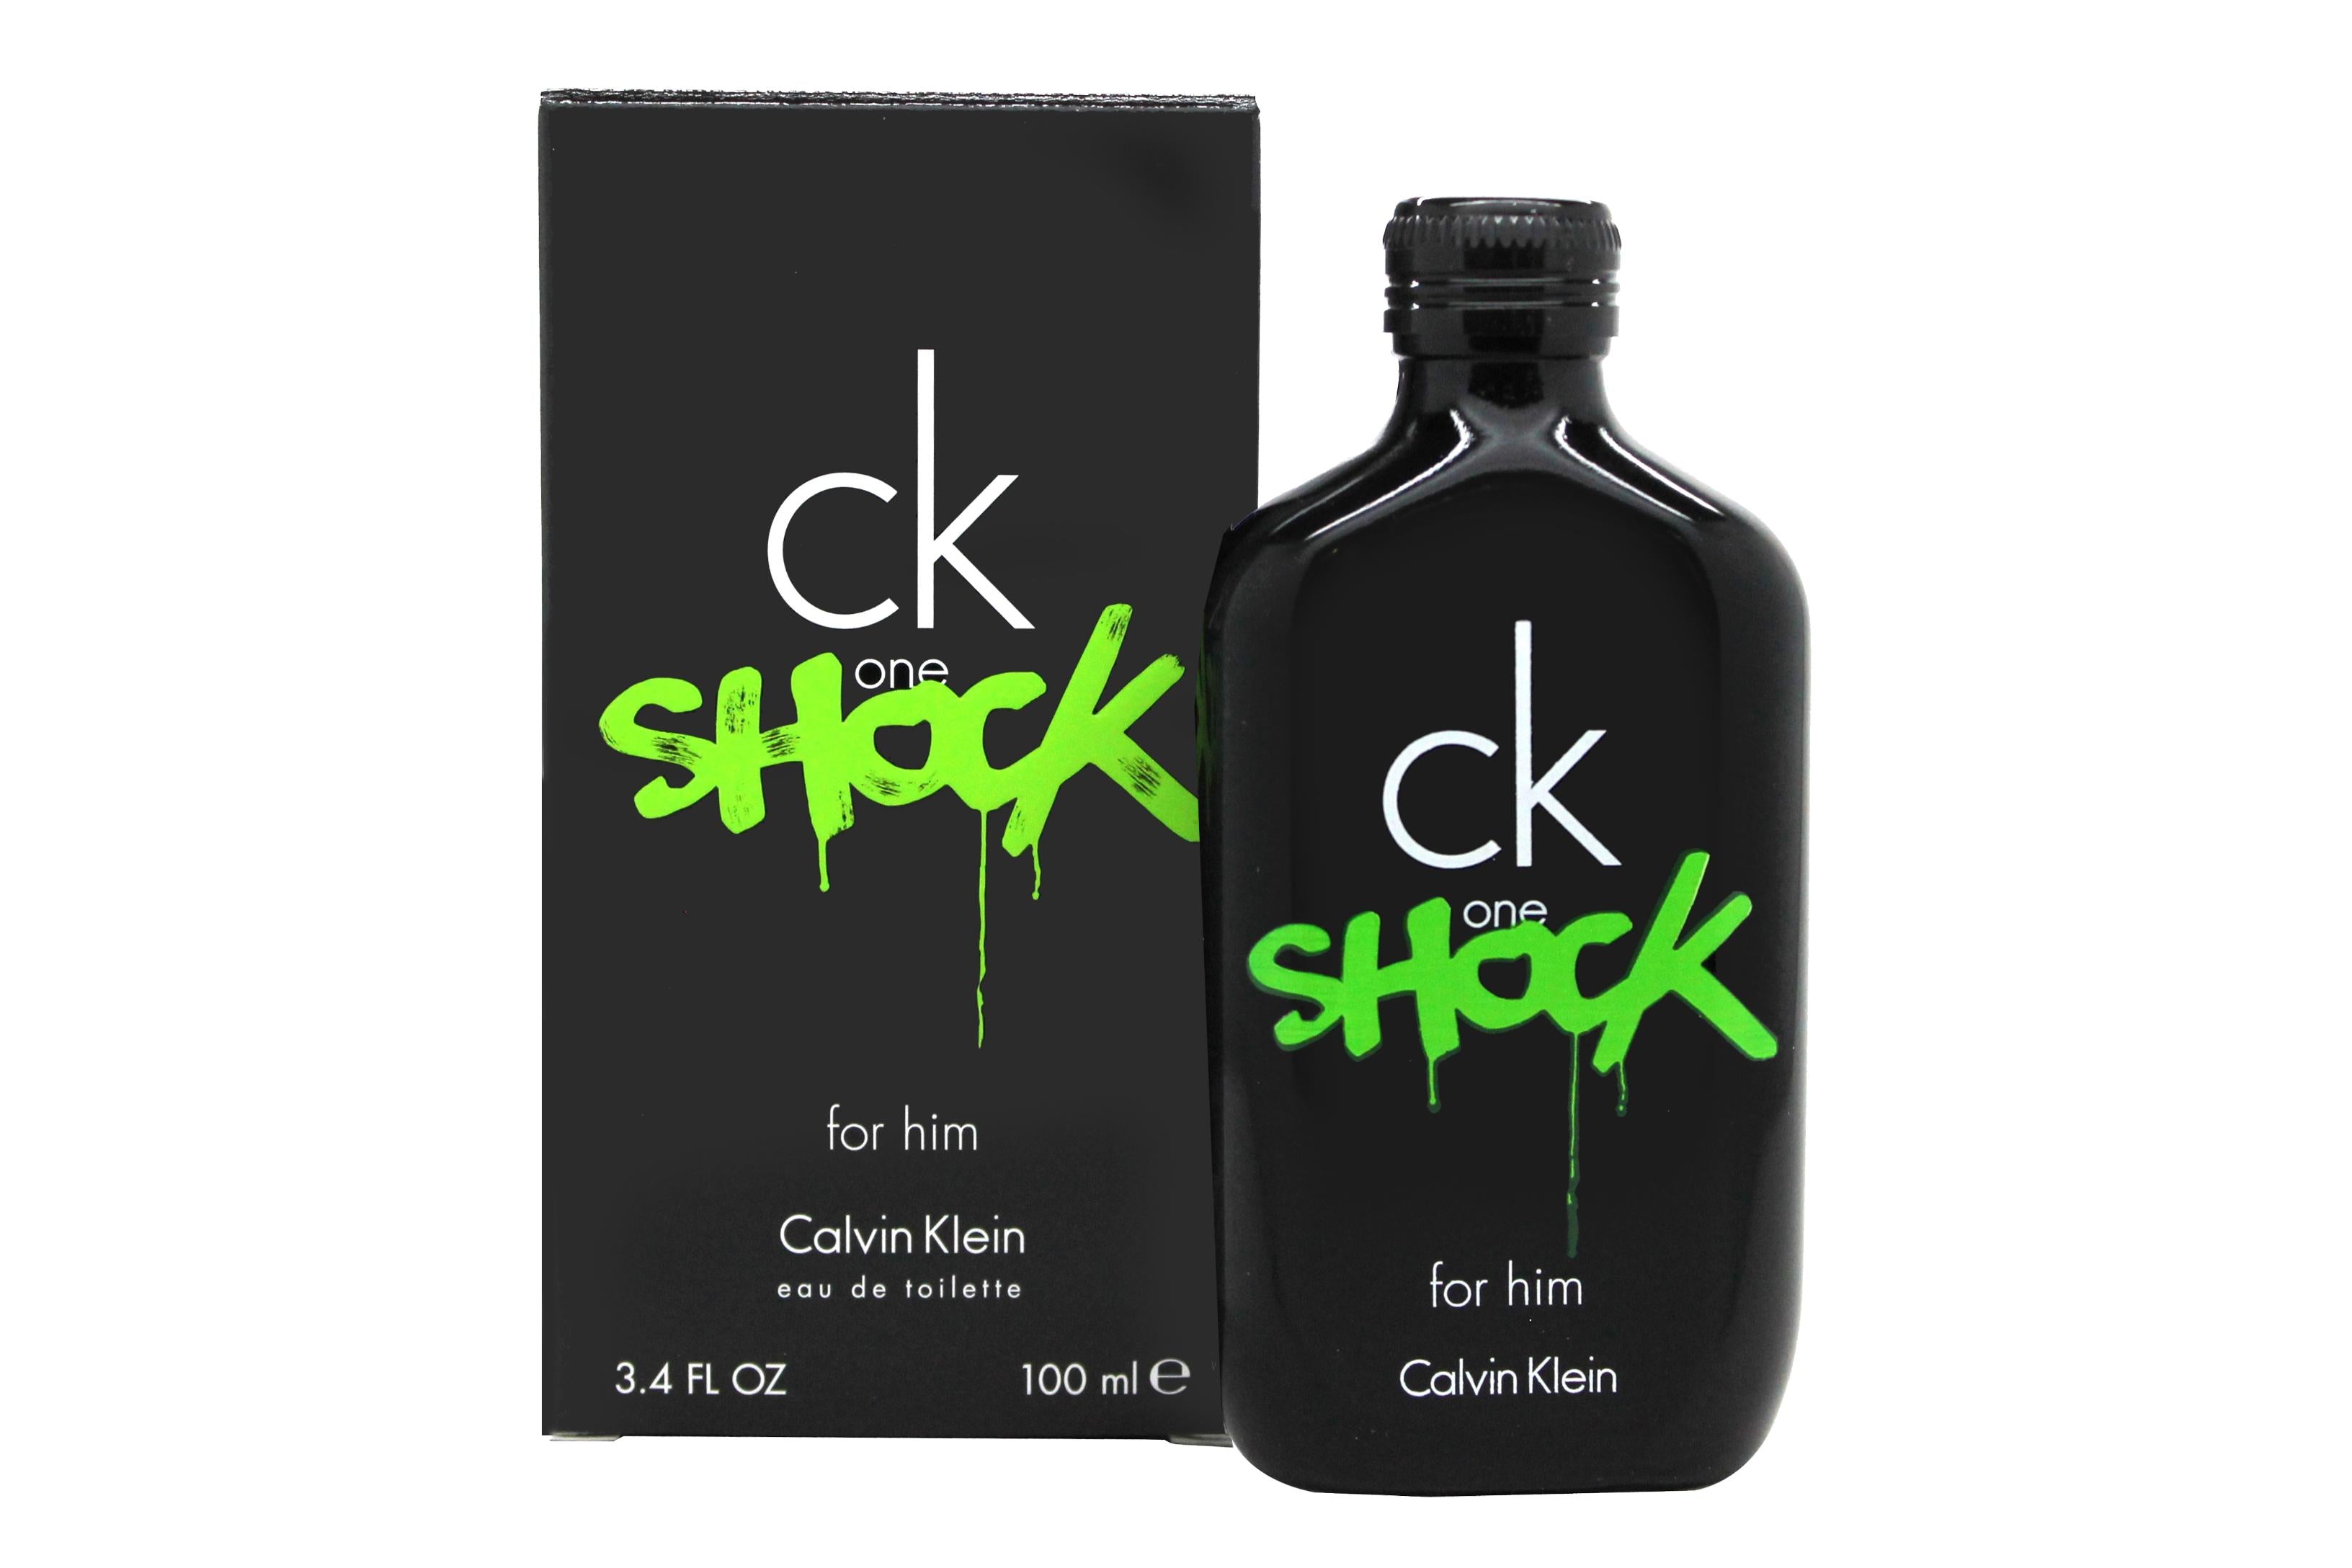 View Calvin Klein CK One Shock Eau de Toilette 100ml Spray information